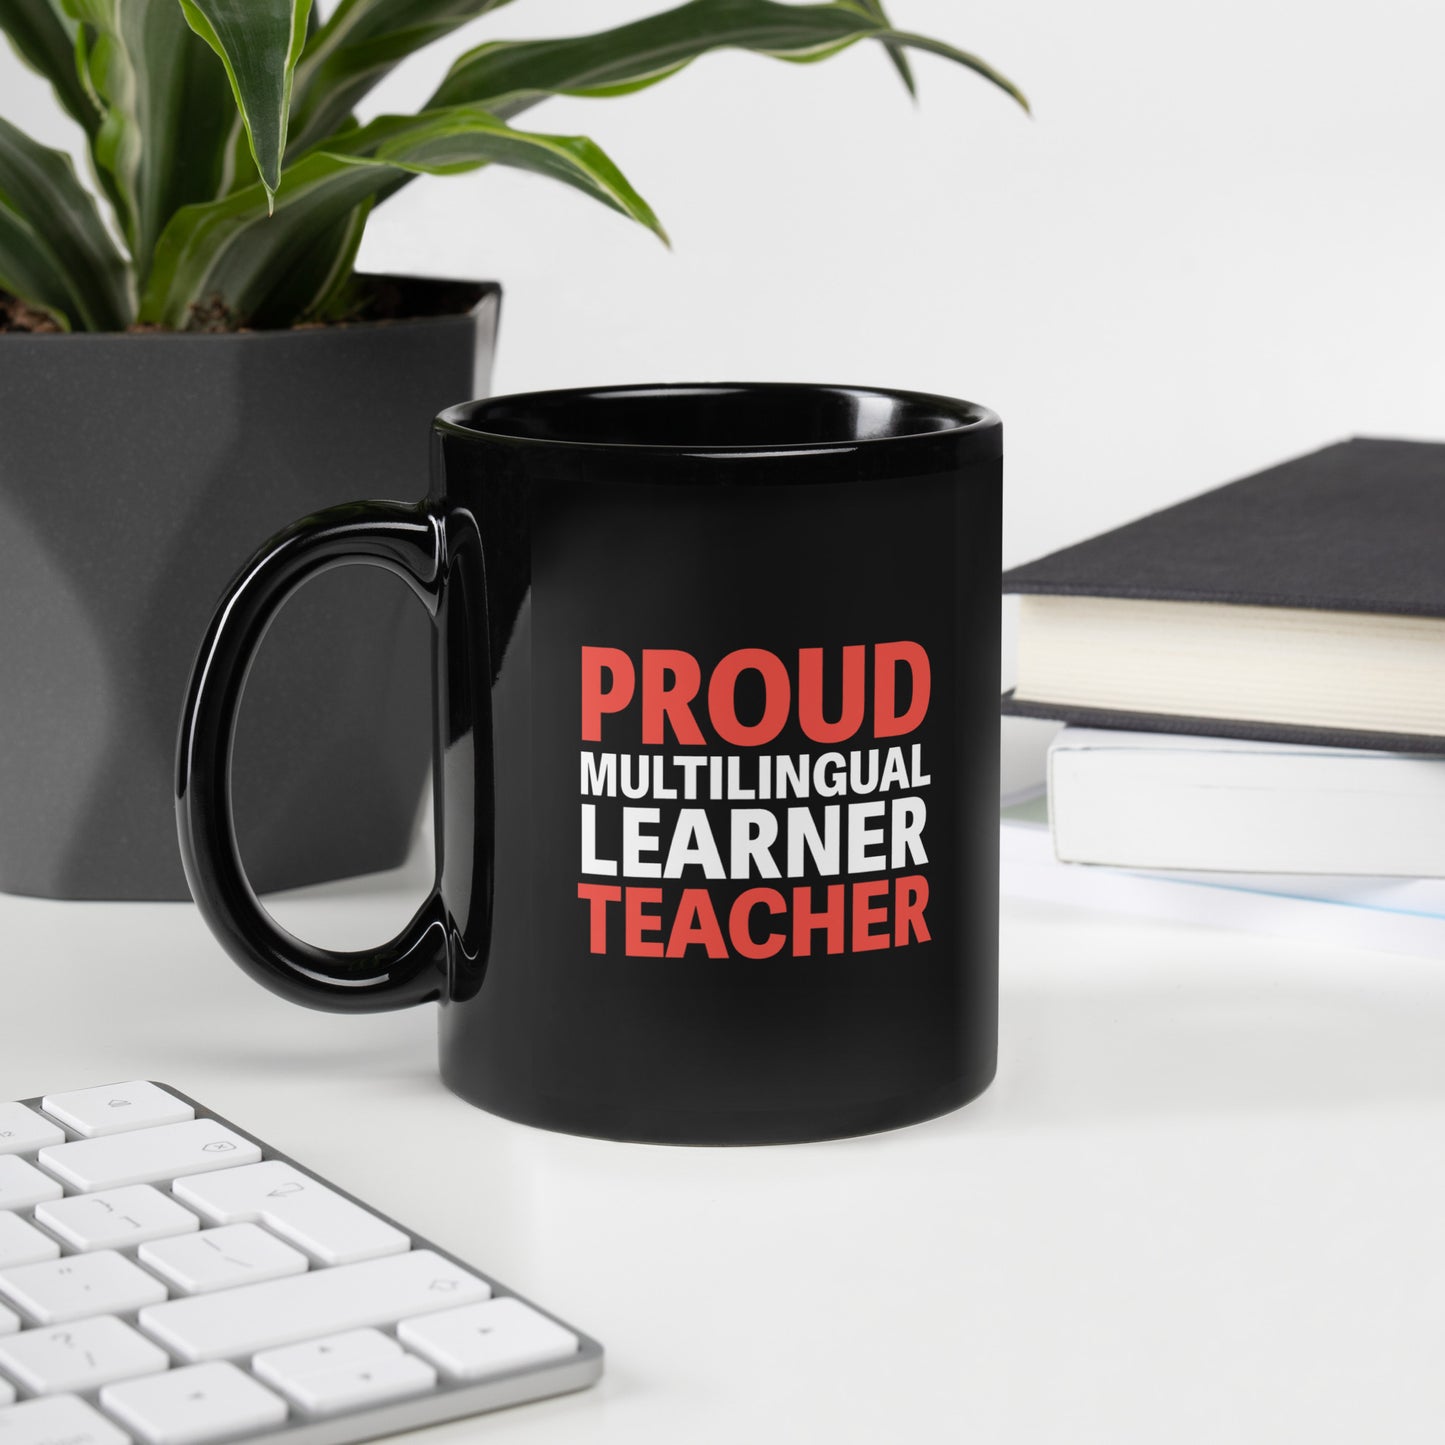 Multilingual Learner Teacher Black Glossy Mug.